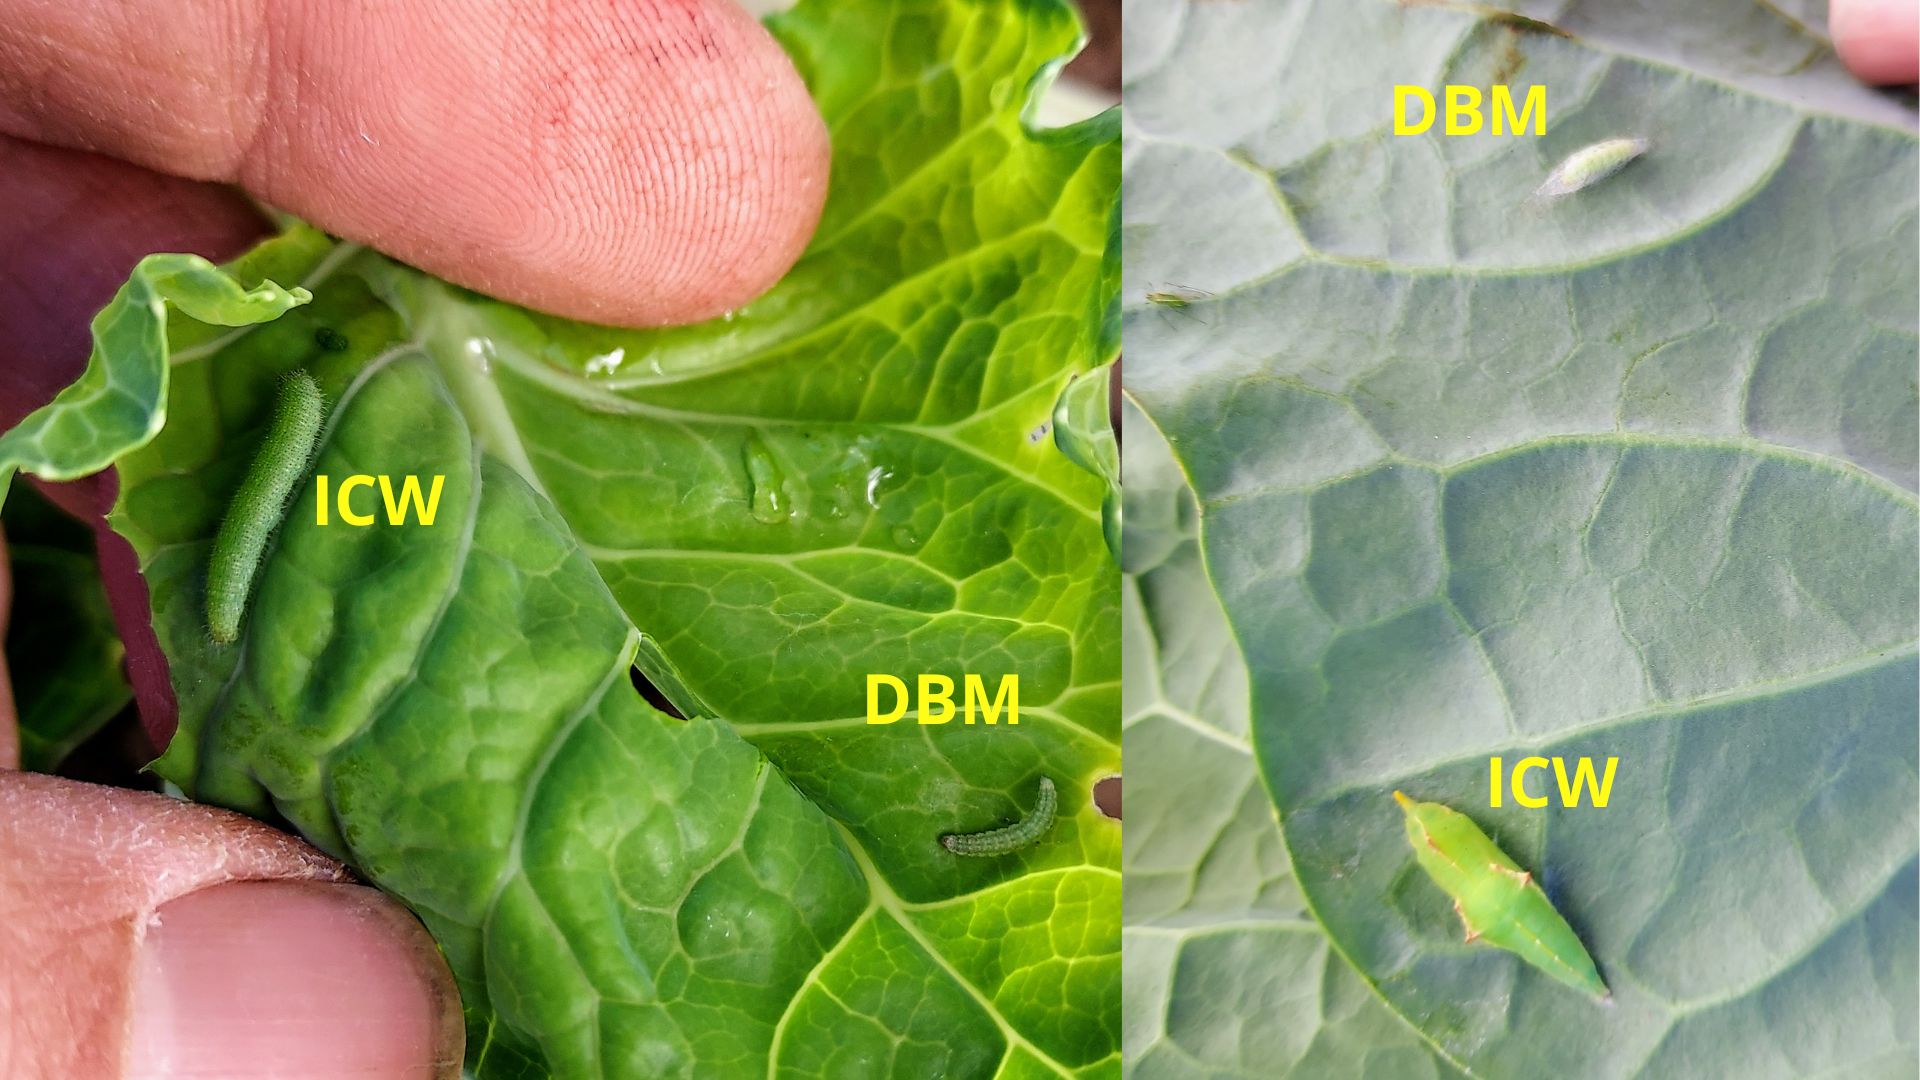 Cabbage worm and Diamondback moth on leaf.